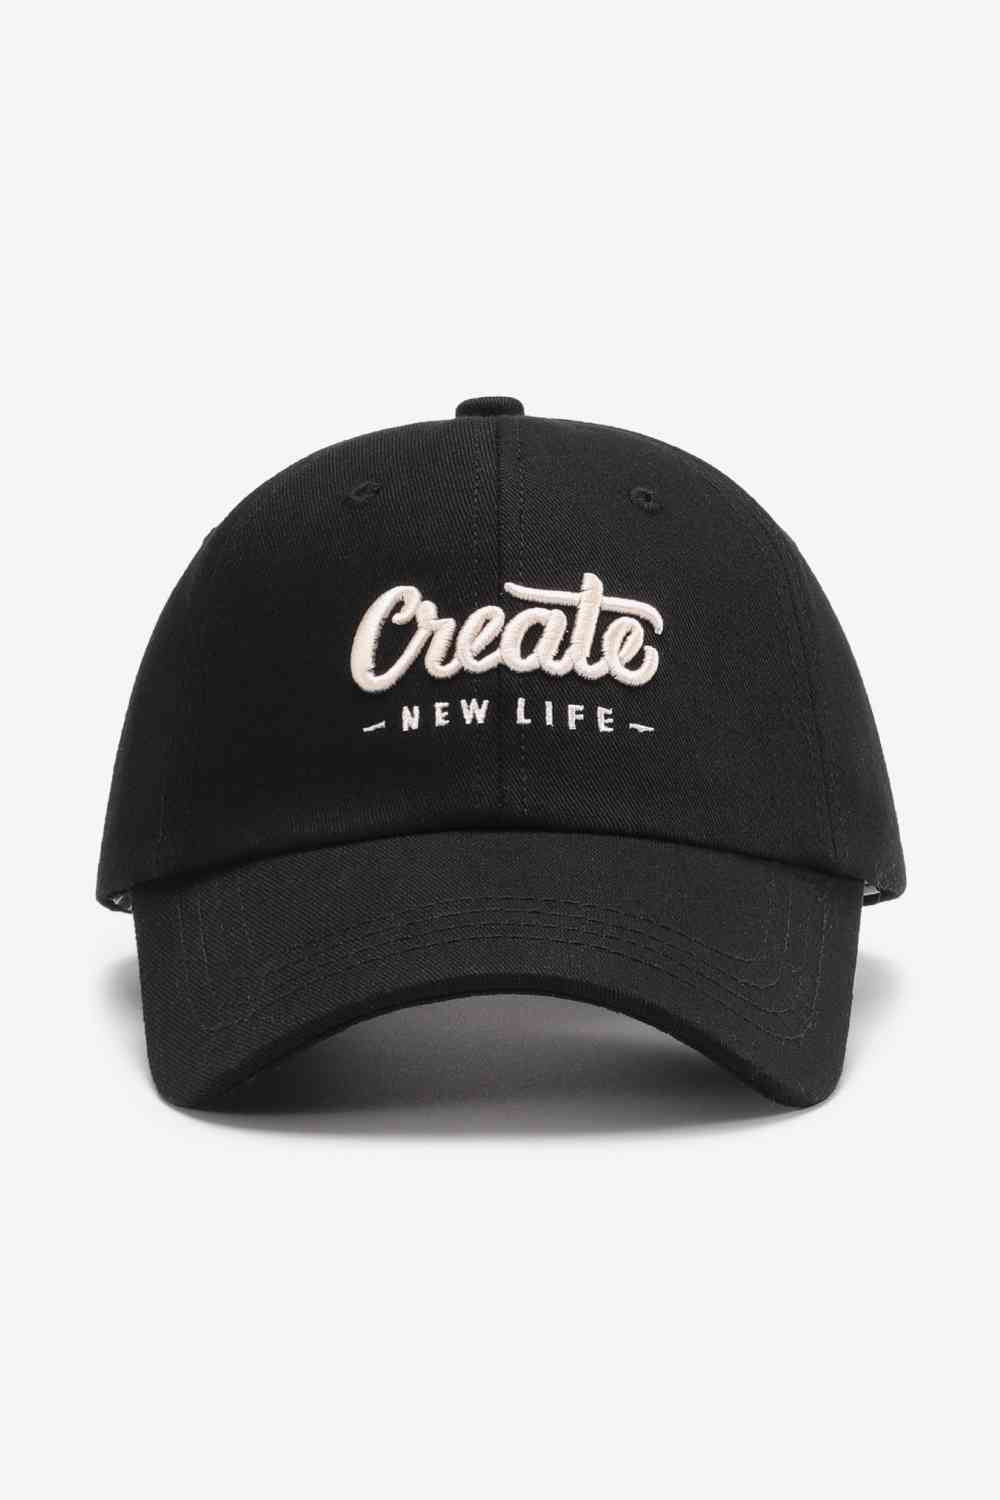 CREATE NEW LIFE Adjustable Cotton Baseball Cap Black One Size